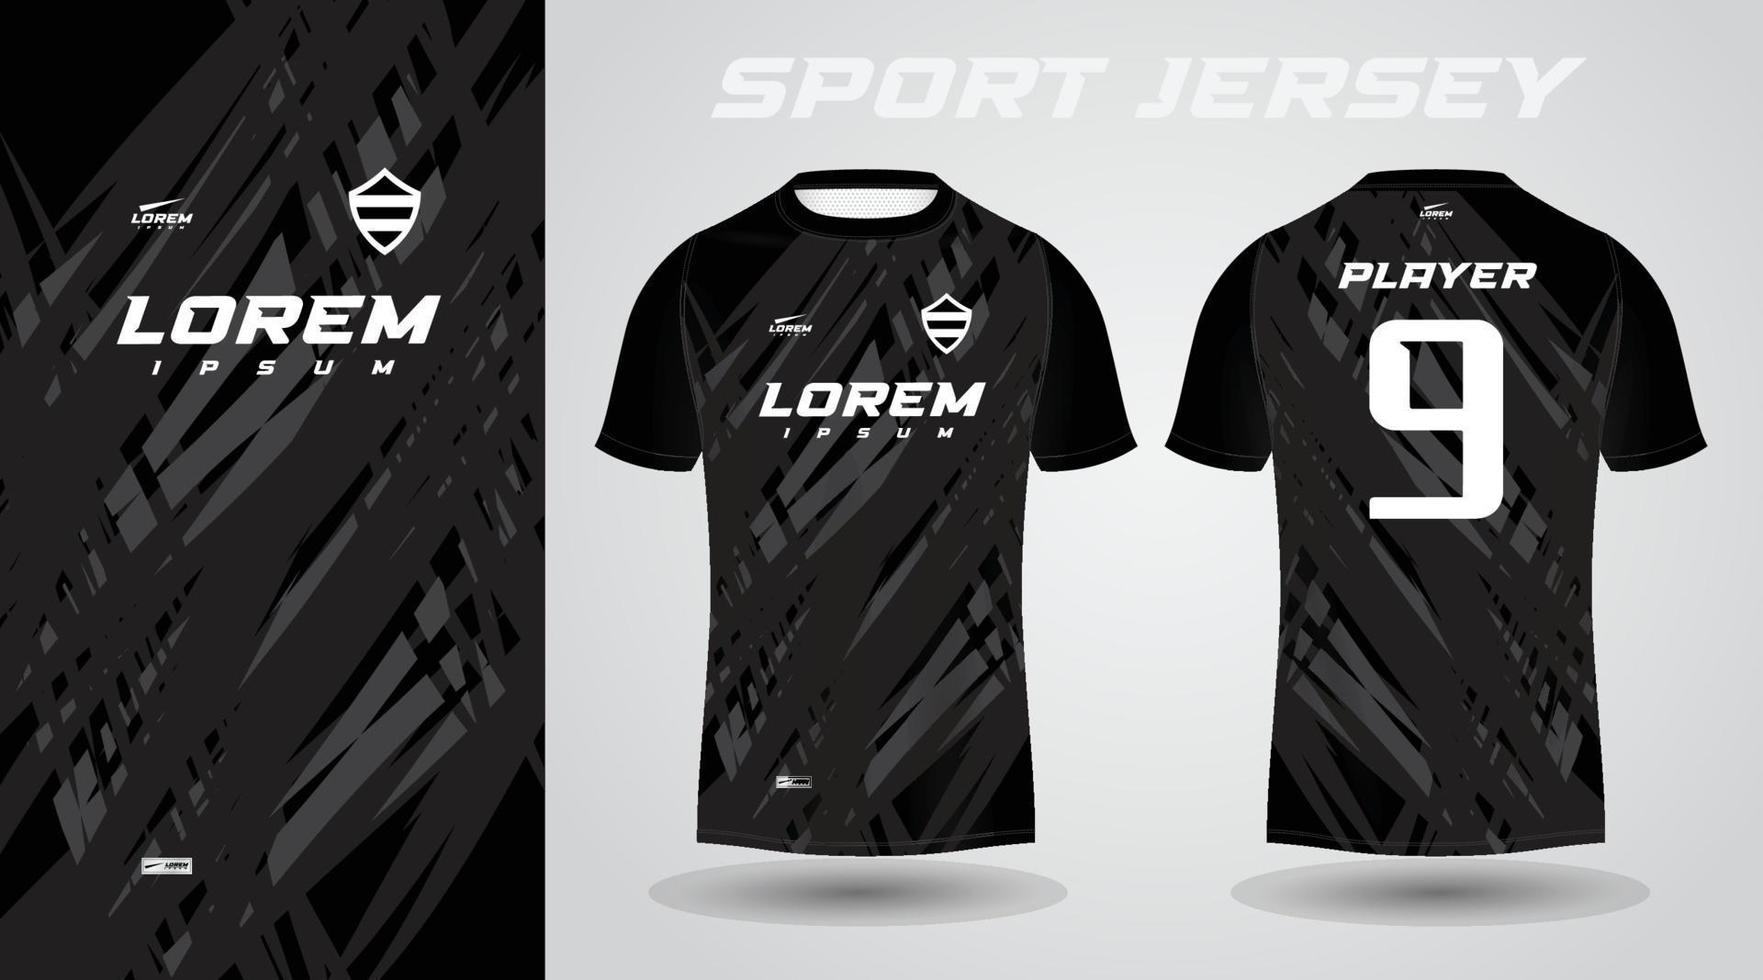 design de camisa esportiva de camiseta preta vetor